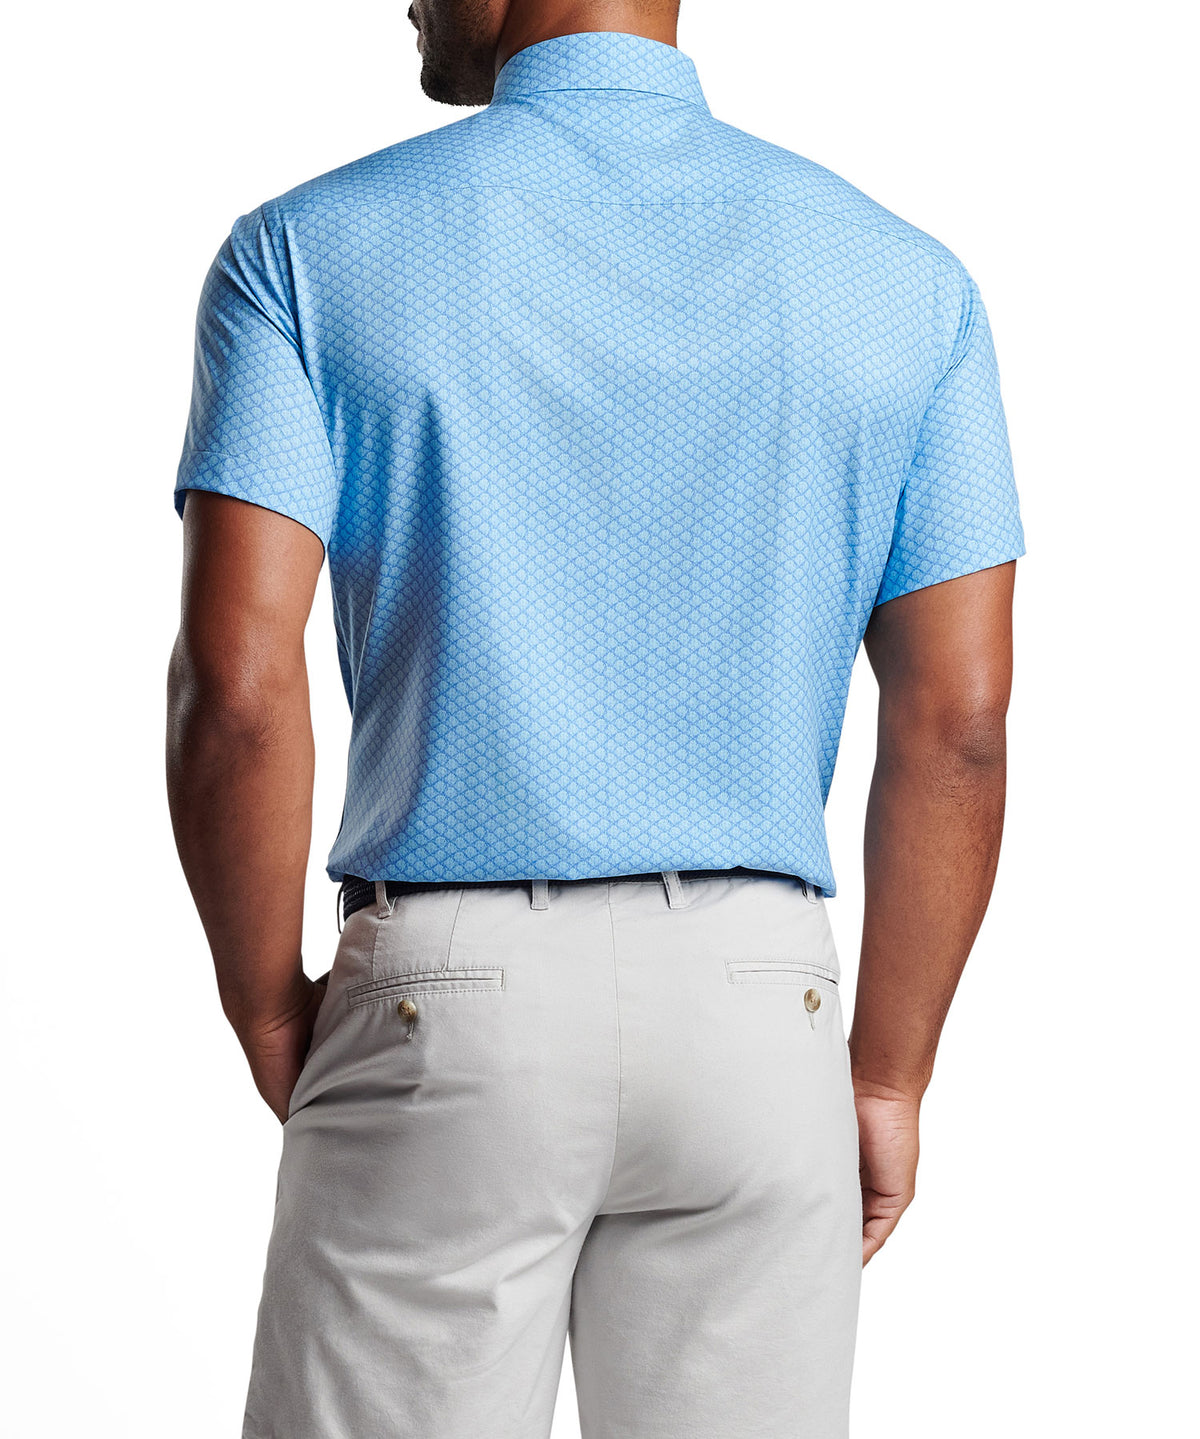 Peter Millar Clam Print Short Sleeve Spread Collar Sport Shirt, Men's Big & Tall